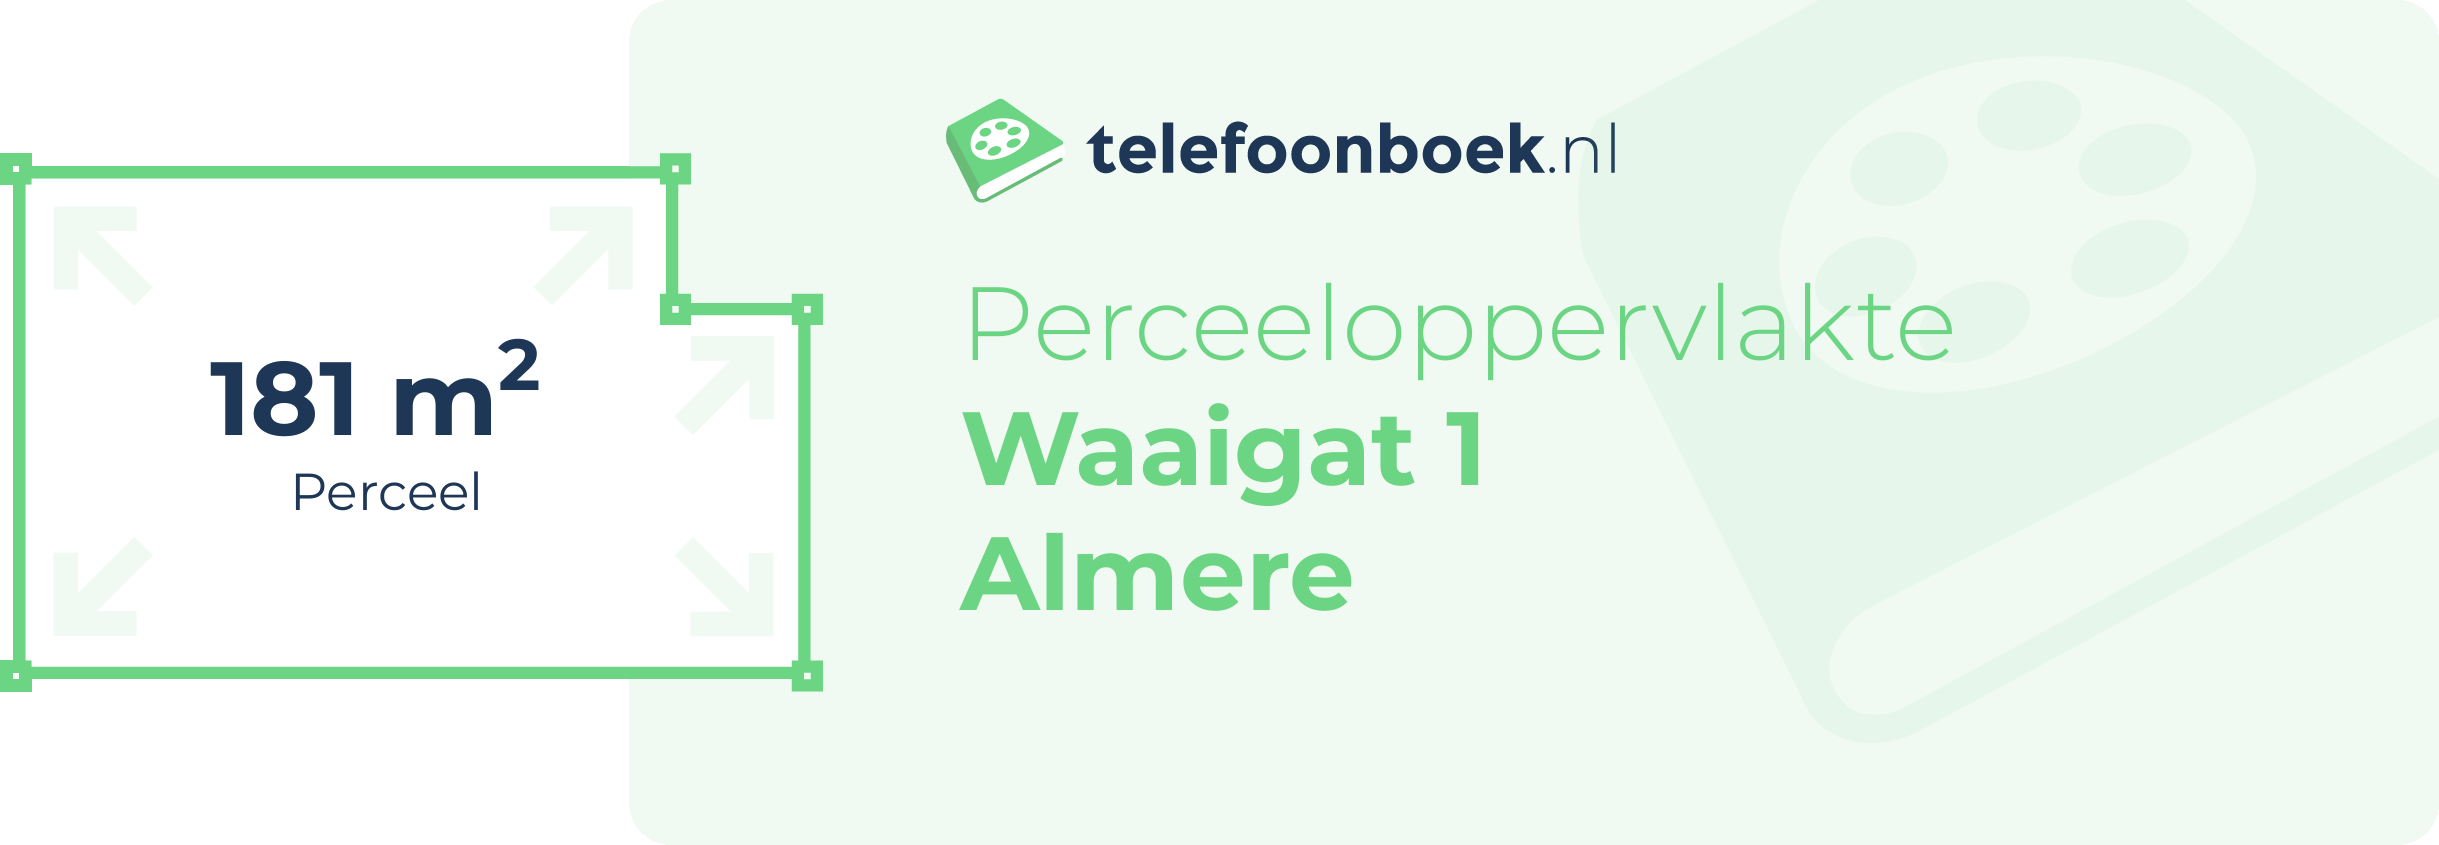 Perceeloppervlakte Waaigat 1 Almere